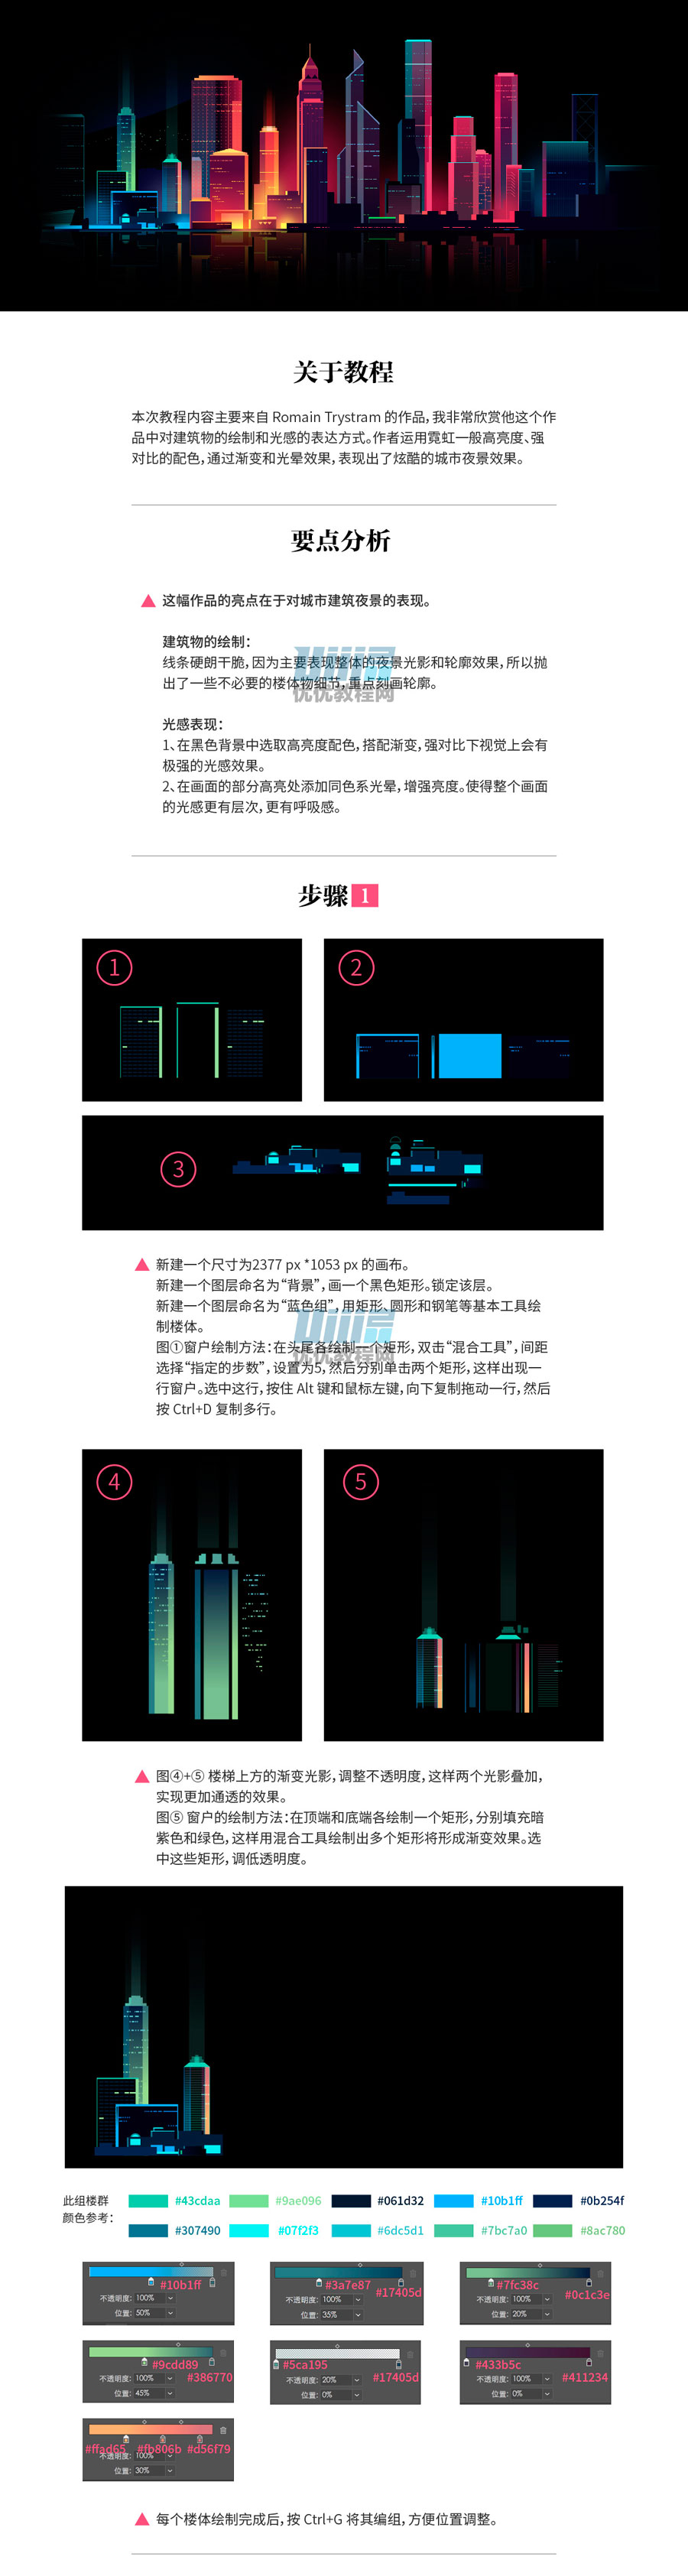 Photoshop结合AI制作绚丽的城市夜景插画,PS教程,素材中国网